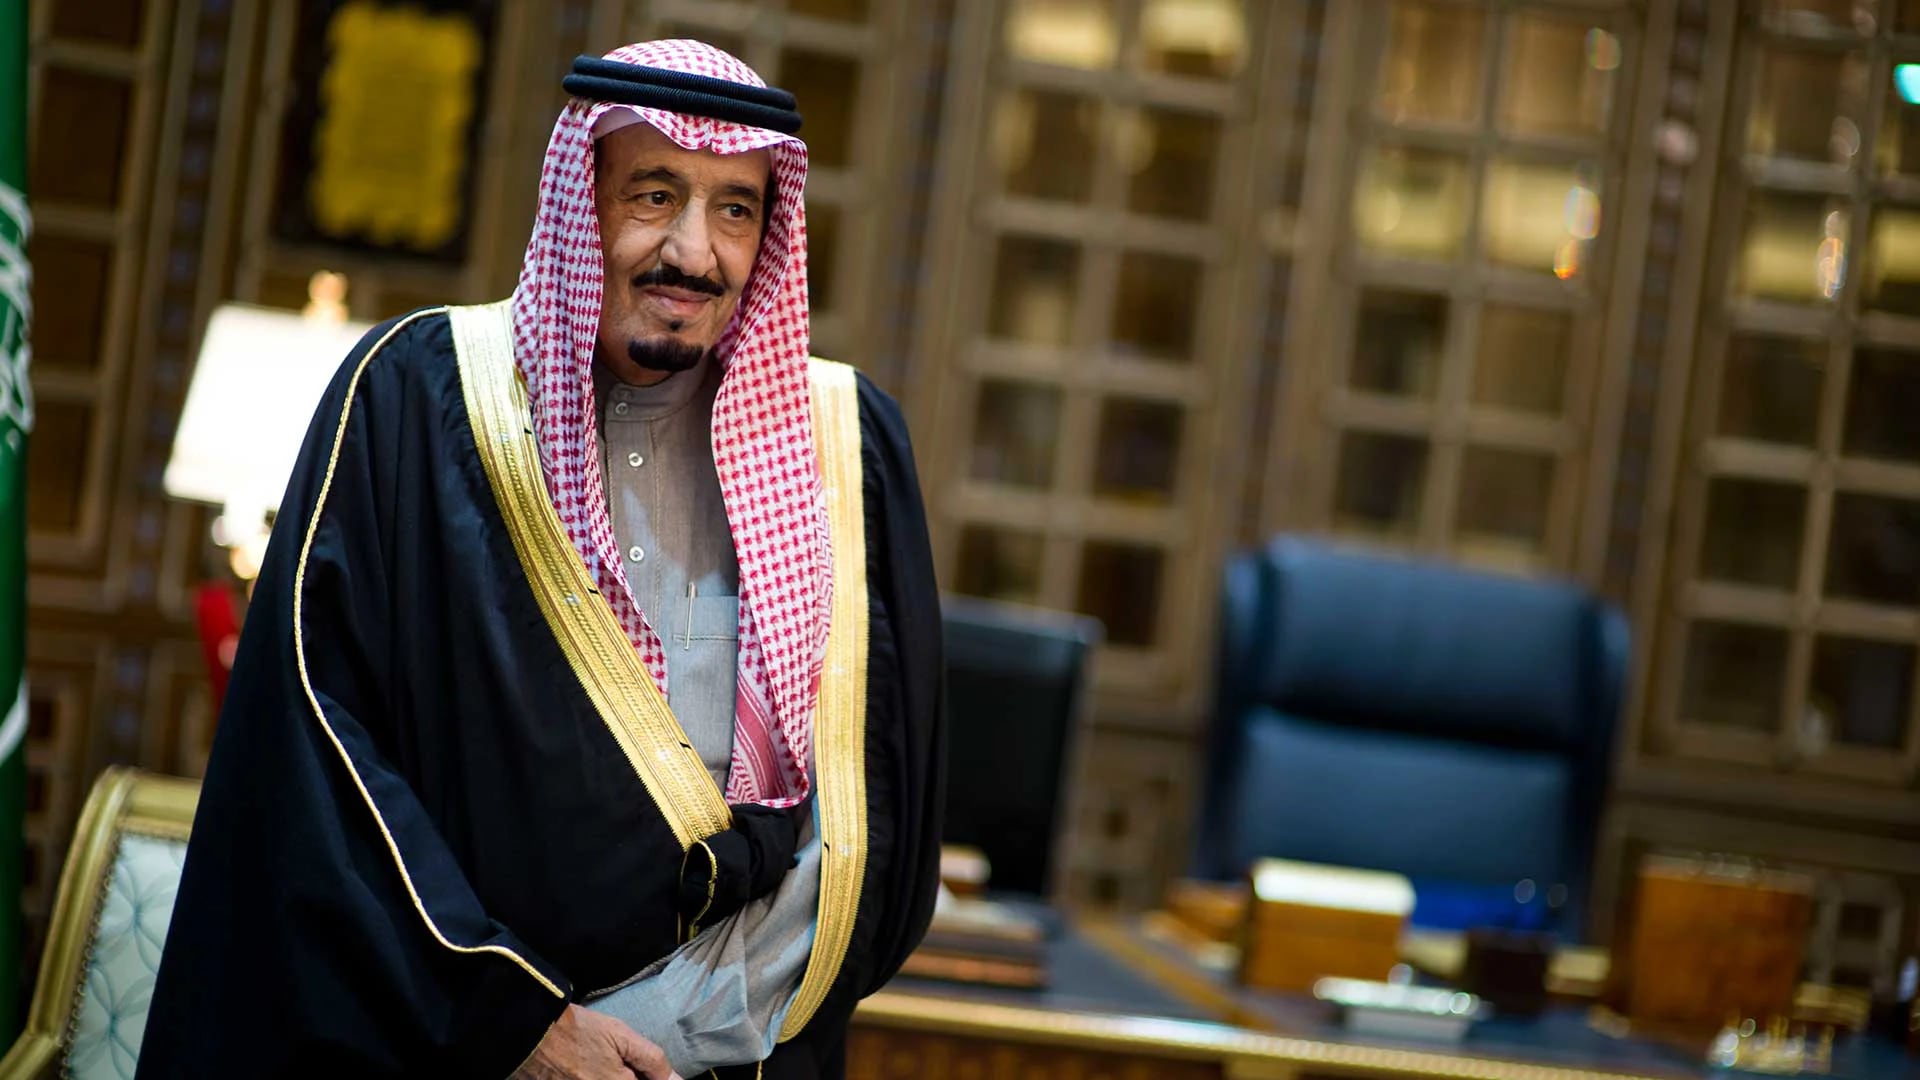 El rey de Arabia Saudita Abdulaziz bin Salman lidera la presión sobre Qatar